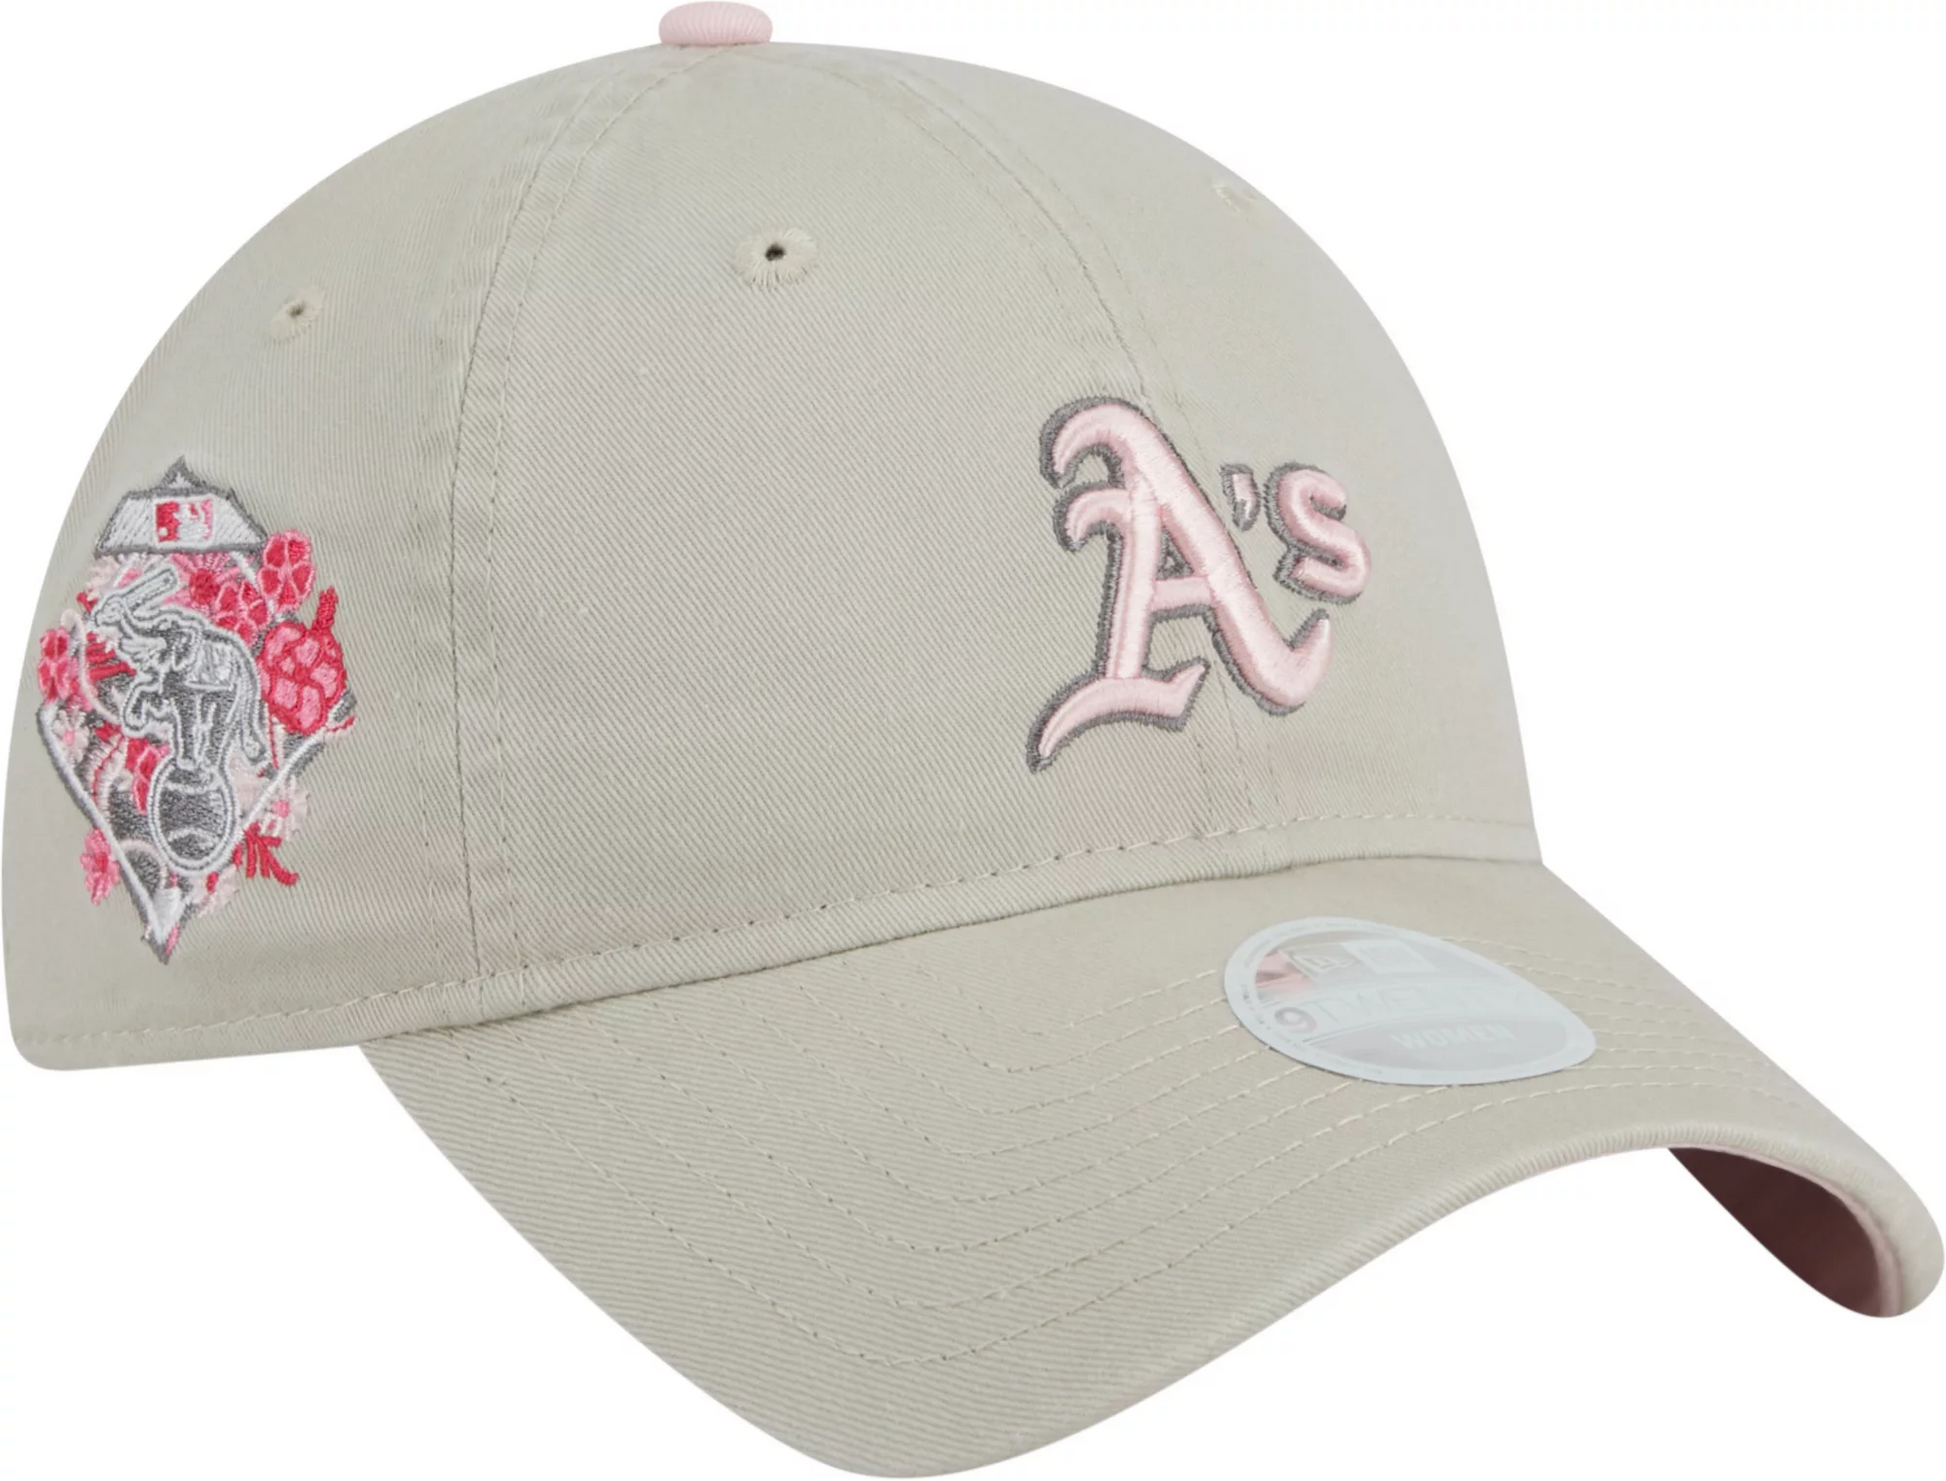 Oakland Athletics Batting Practice Hats, A's Batting Practice Jerseys,  Apparel